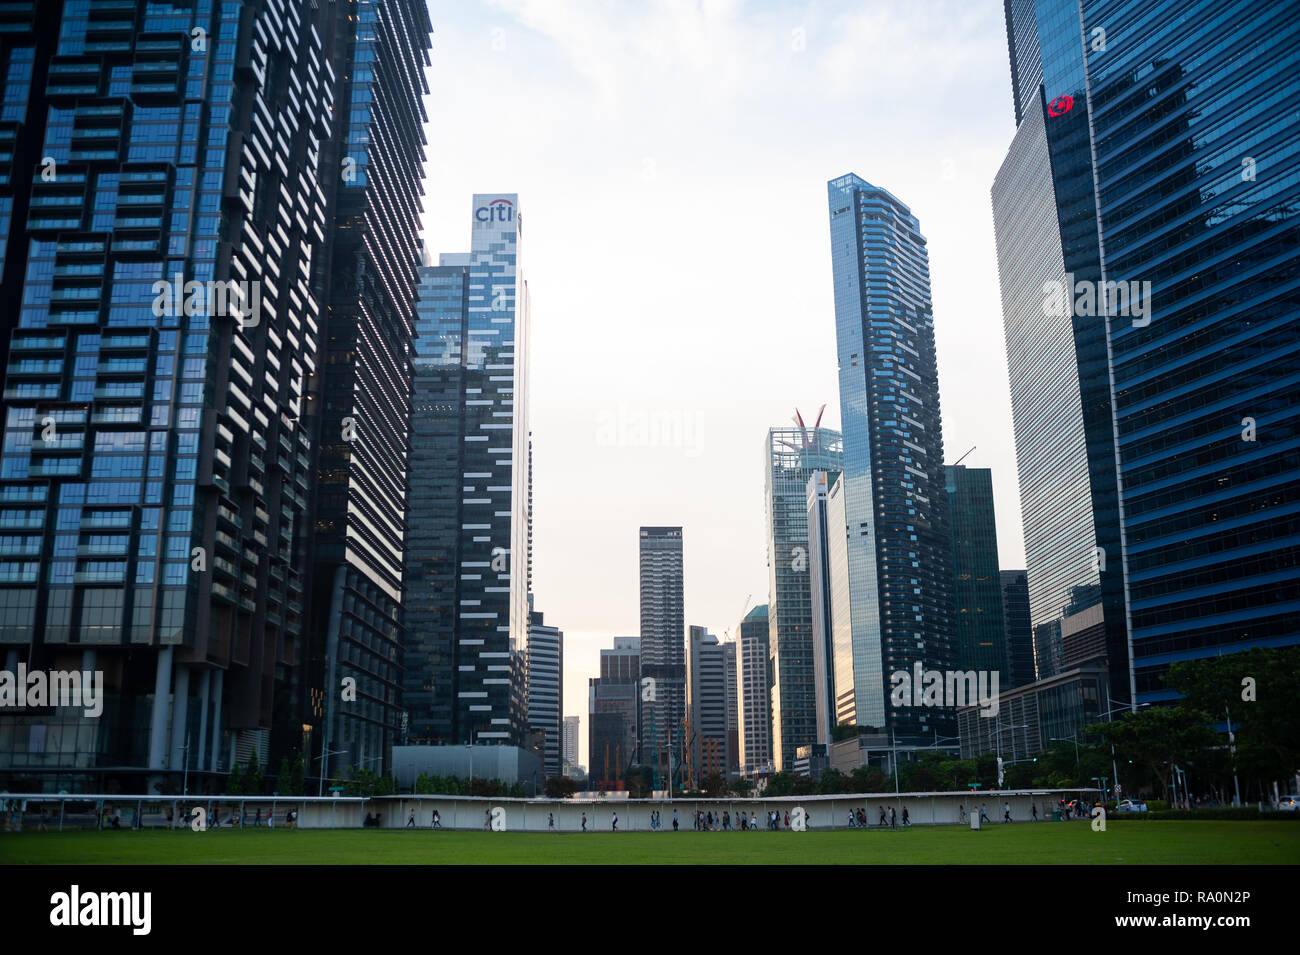 19.10.2018, Singapore, Republik Singapur, Asien - Moderne Wolkenkratzer reihen sich entlang des Geschaeftsviertels à Marina Bay Marina Un auf dem Banque D'Images